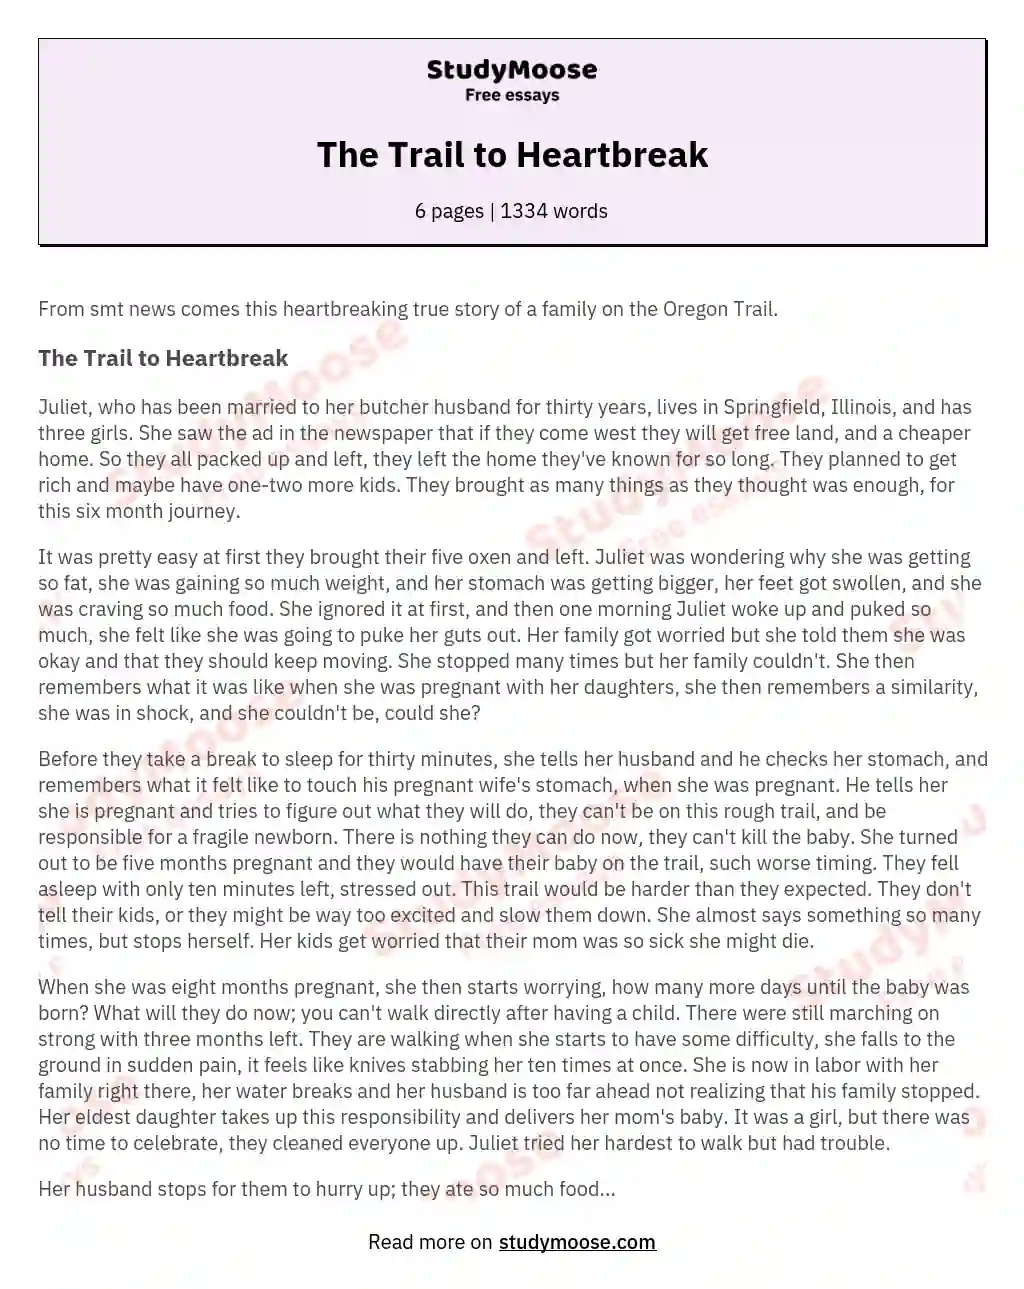 good essay titles for heartbreak